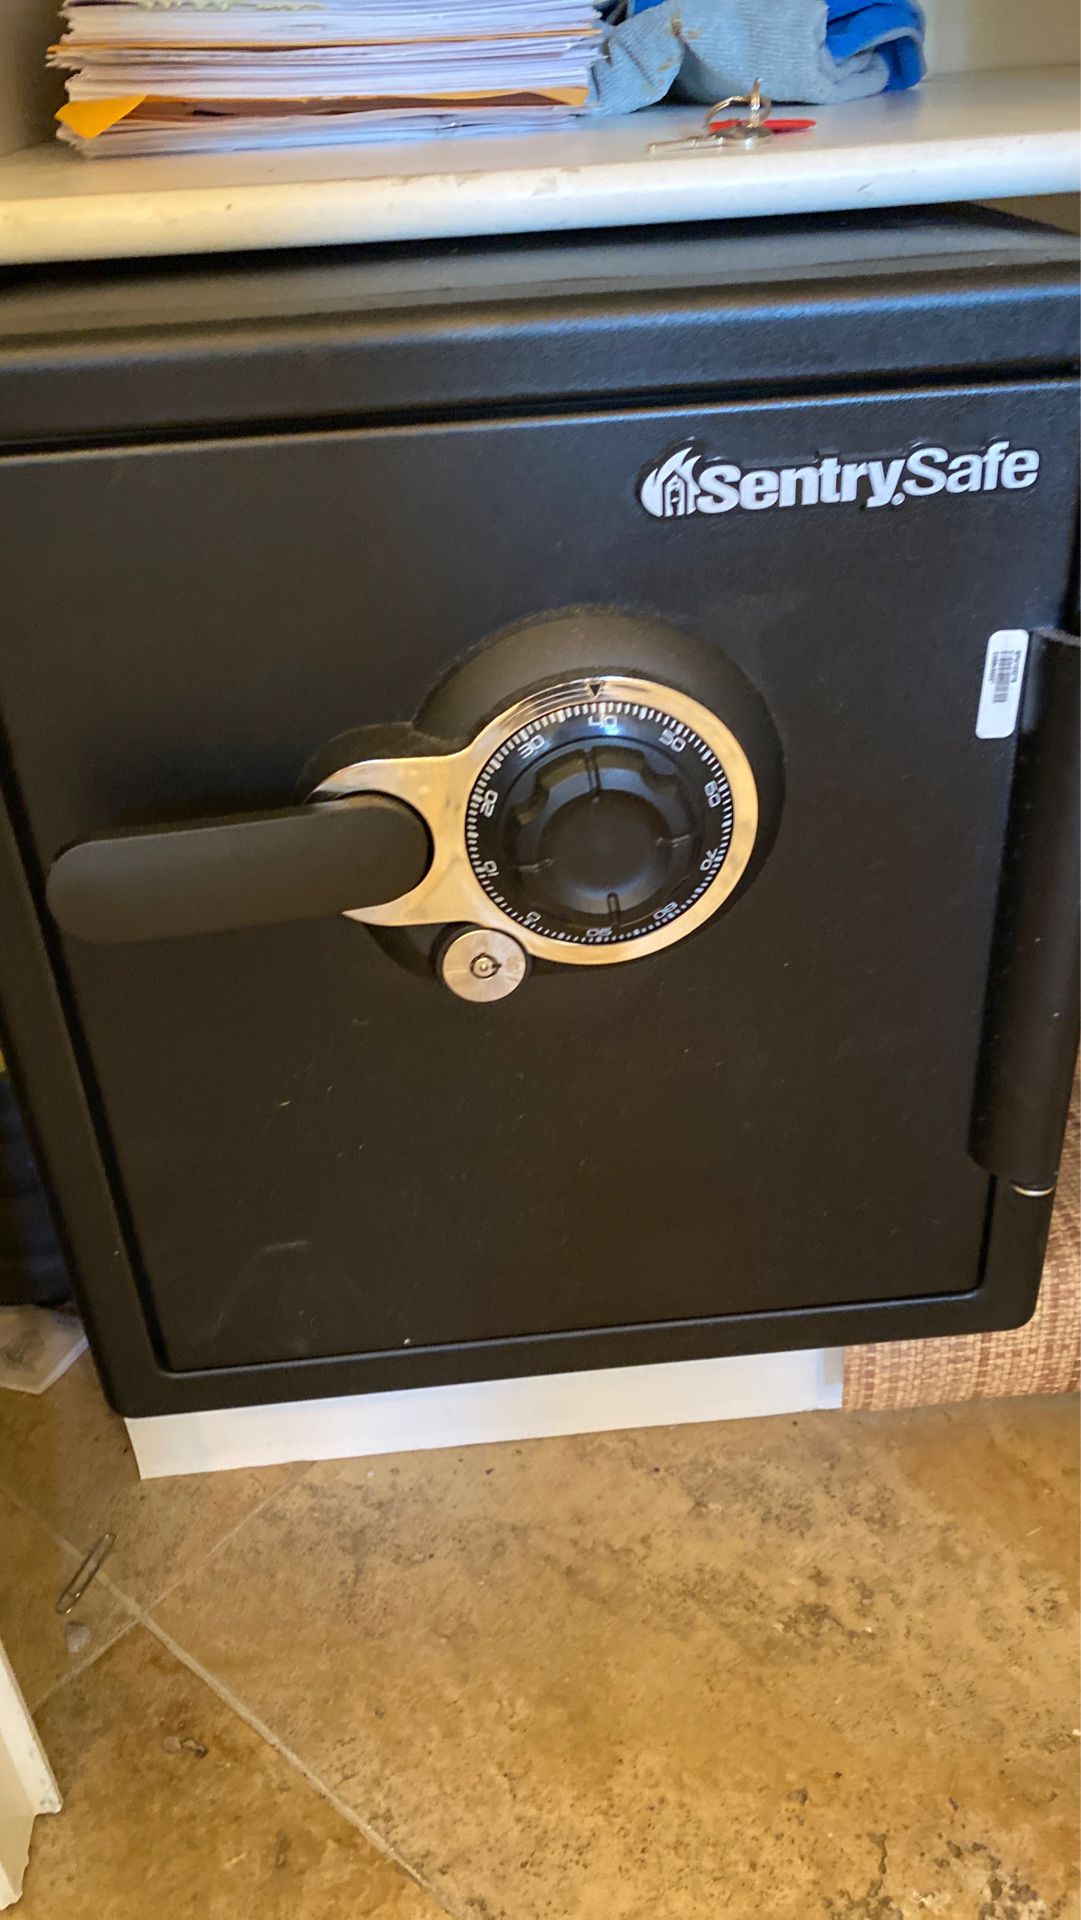 Sentry Safe